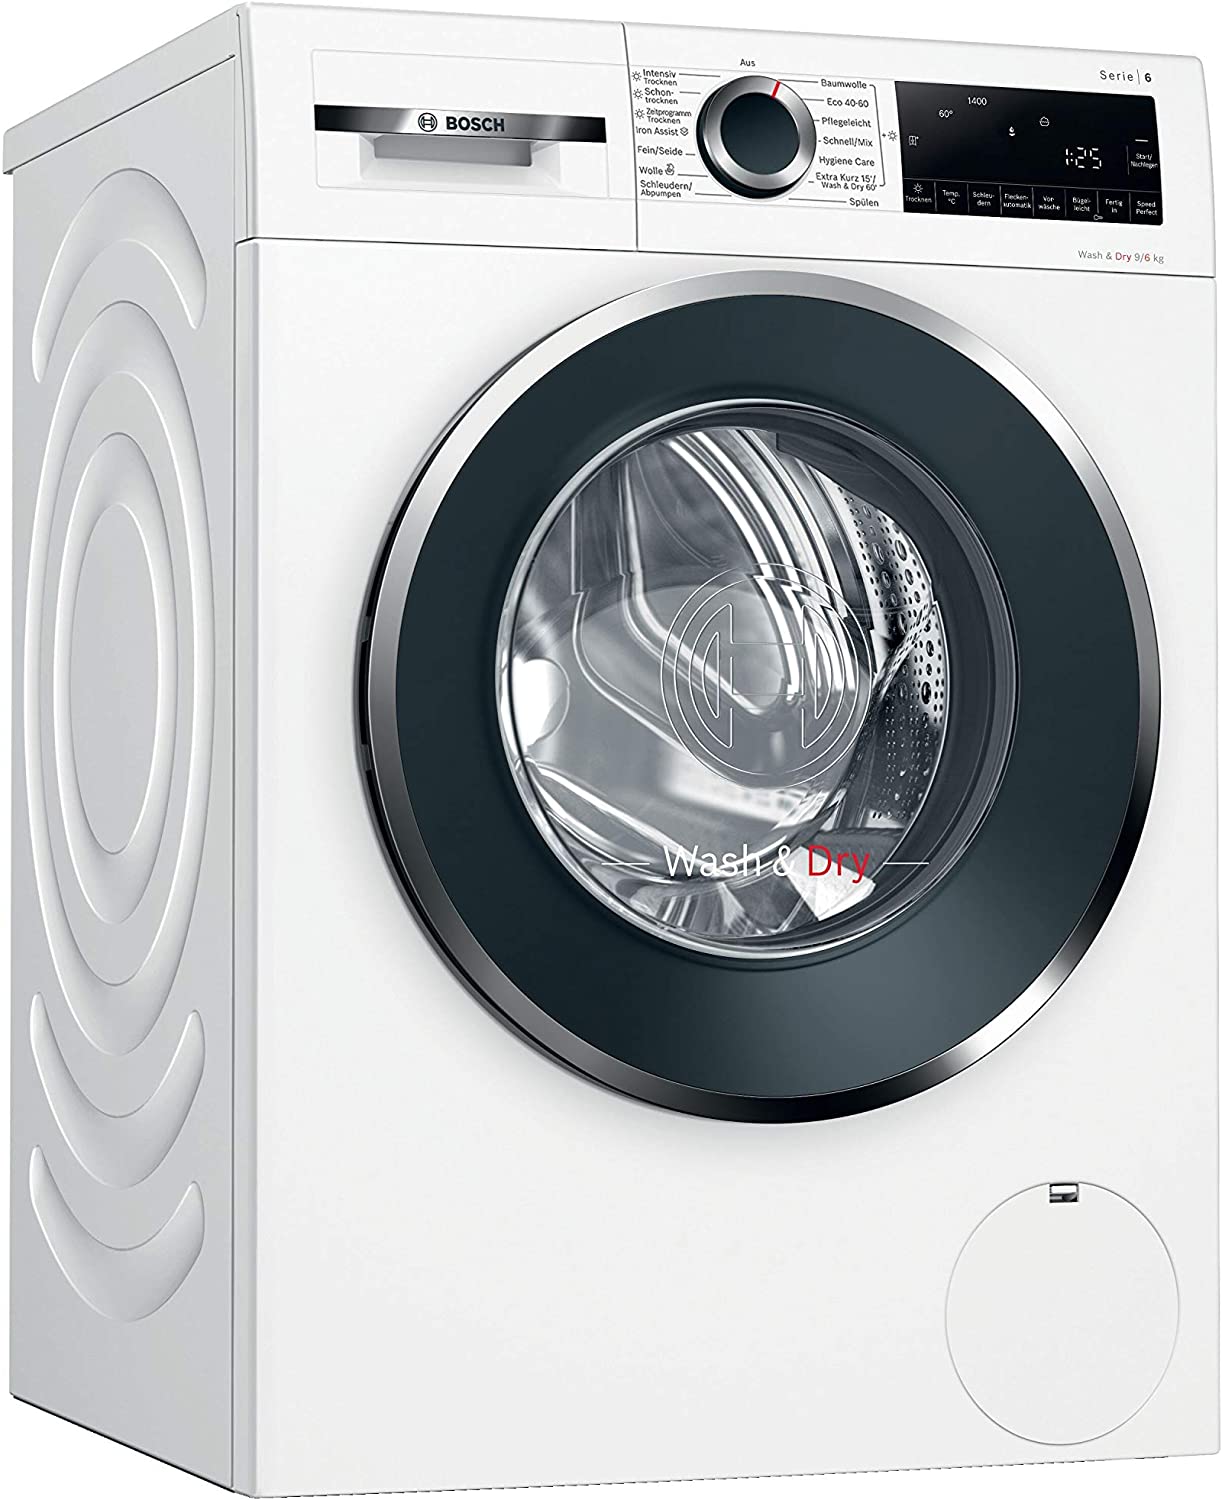 Bosch washing heat pump condensation dryer dryer WNG24440 series 6 white Veļas žāvētājs